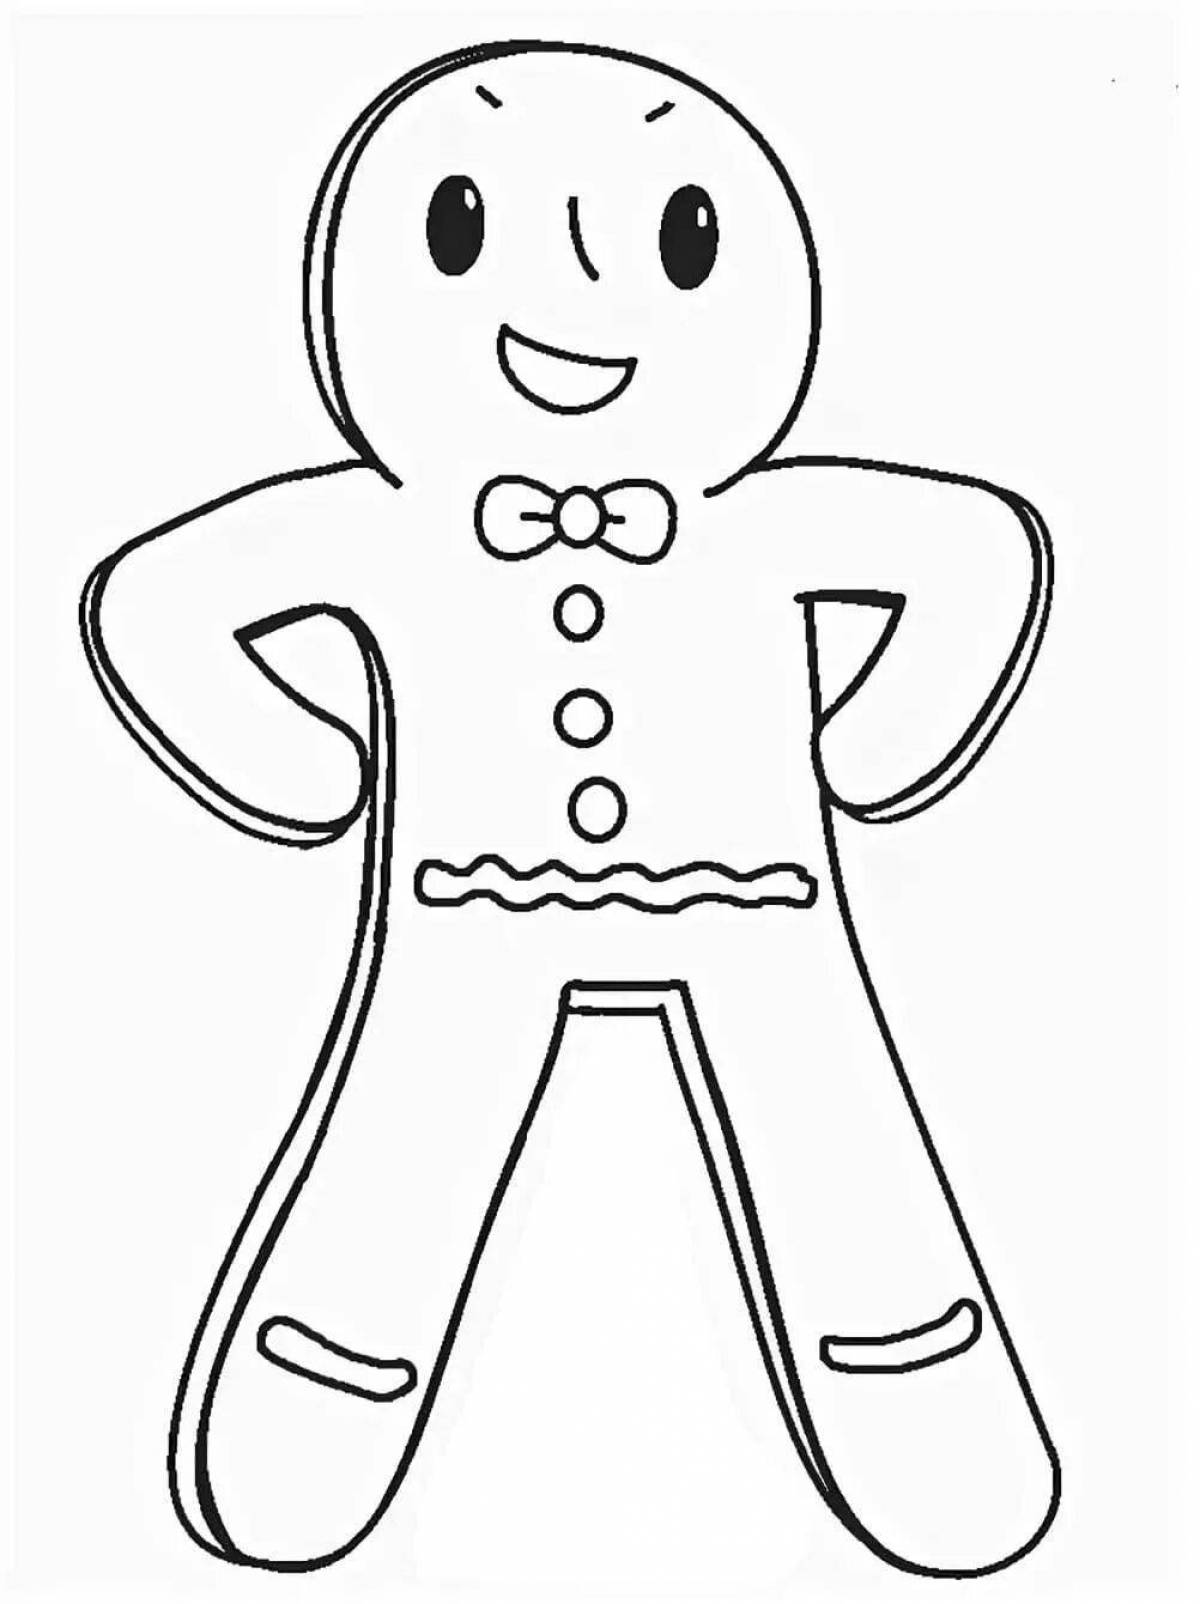 Coloring book shiny gingerbread man